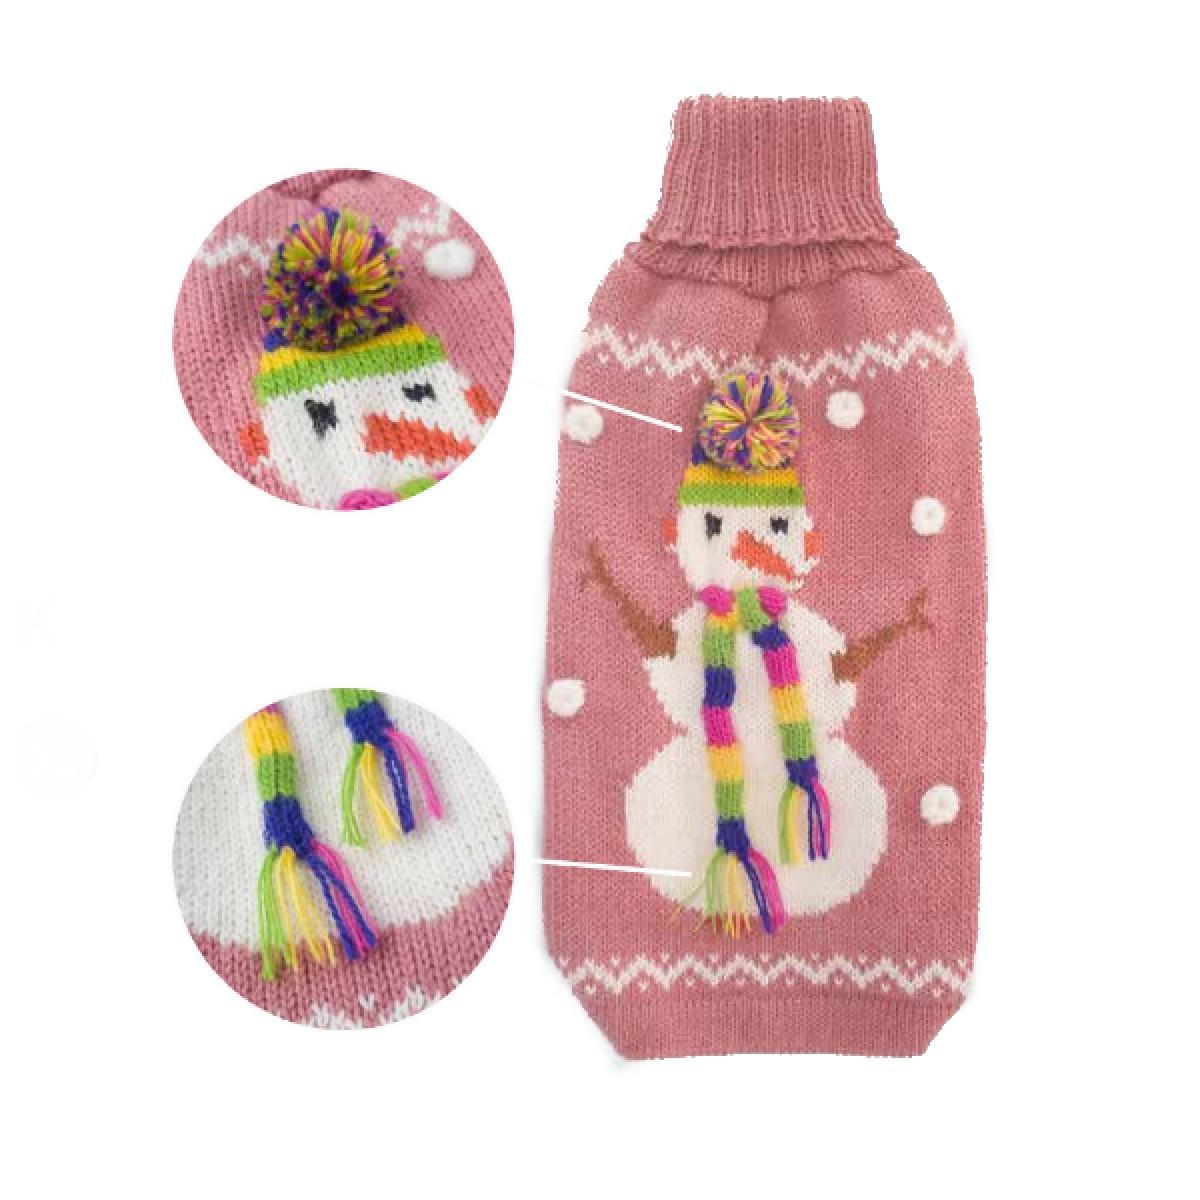 Alqo Wasi Snowman Alpaca Dog Sweater - Pink